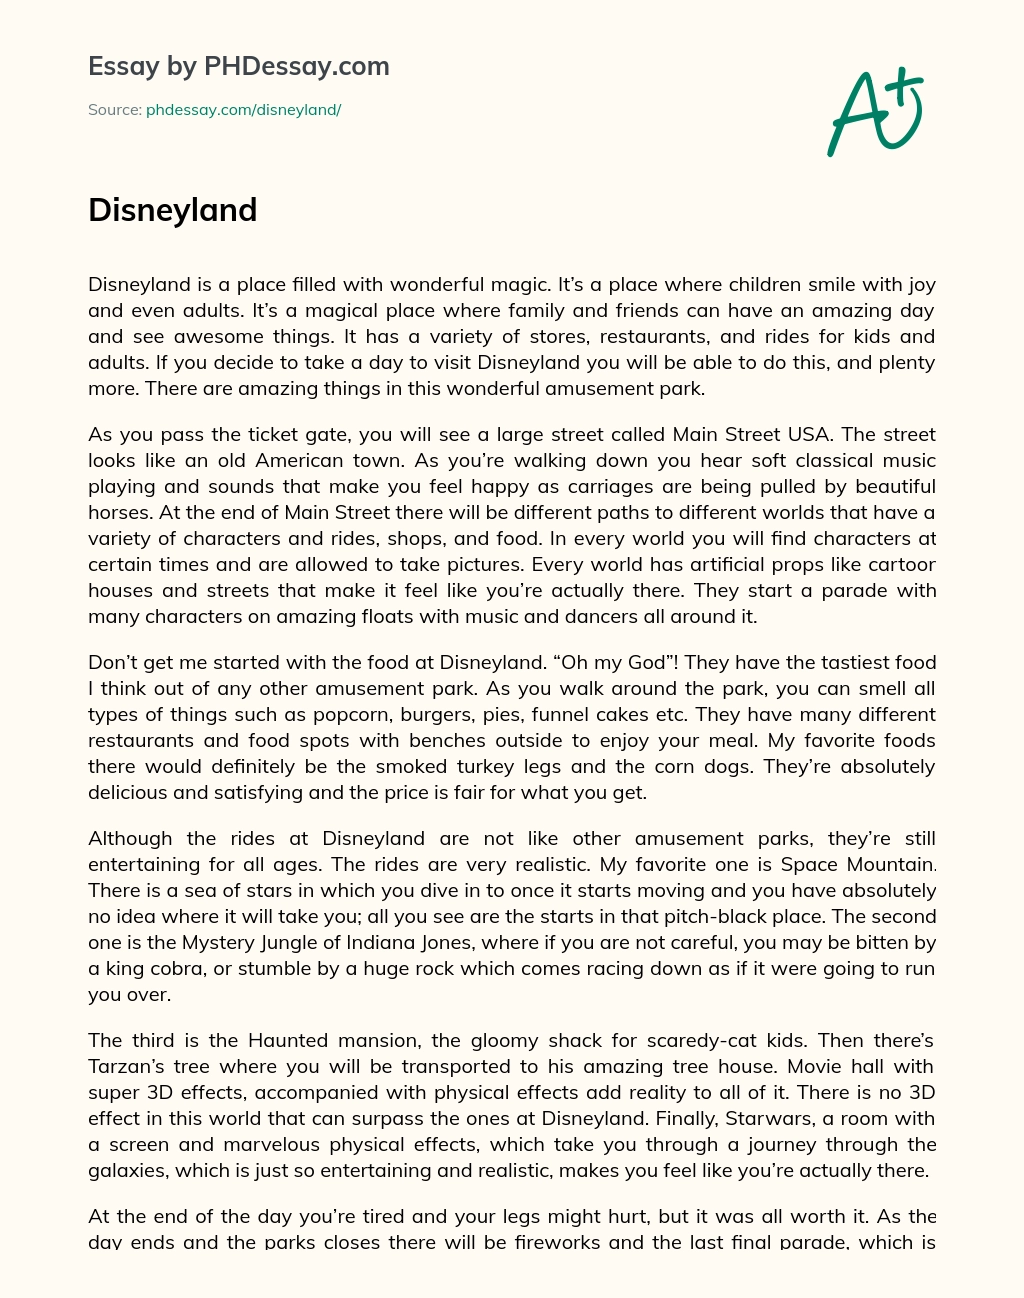 Disneyland essay